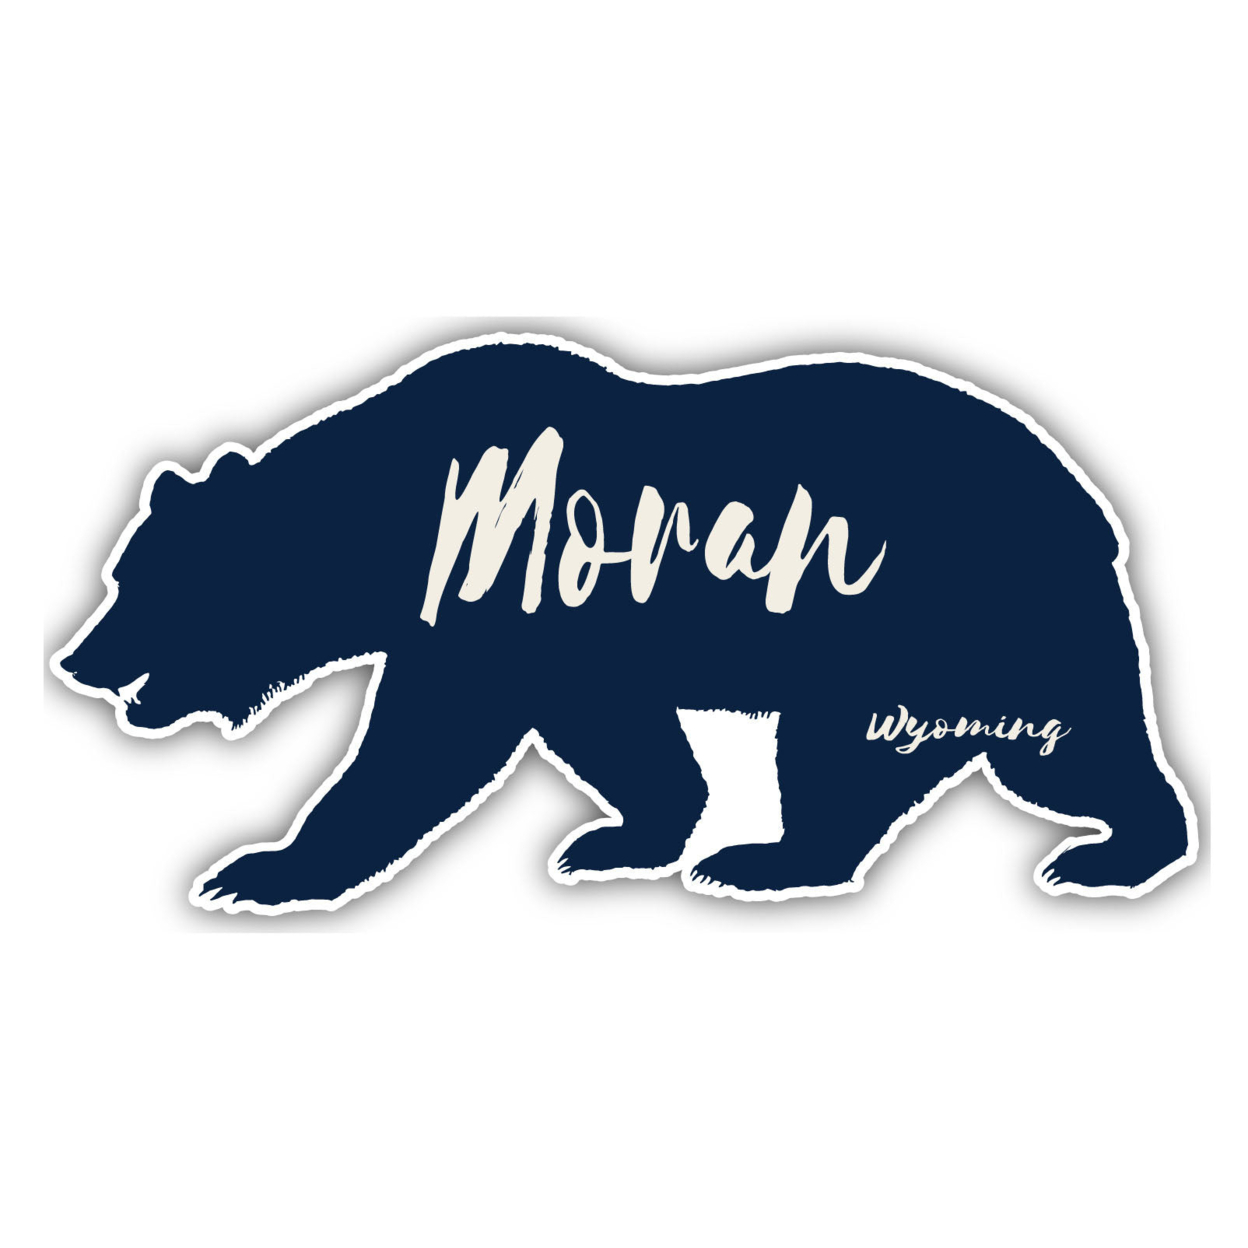 Moran Wyoming Souvenir Decorative Stickers (Choose Theme And Size) - Single Unit, 2-Inch, Camp Life